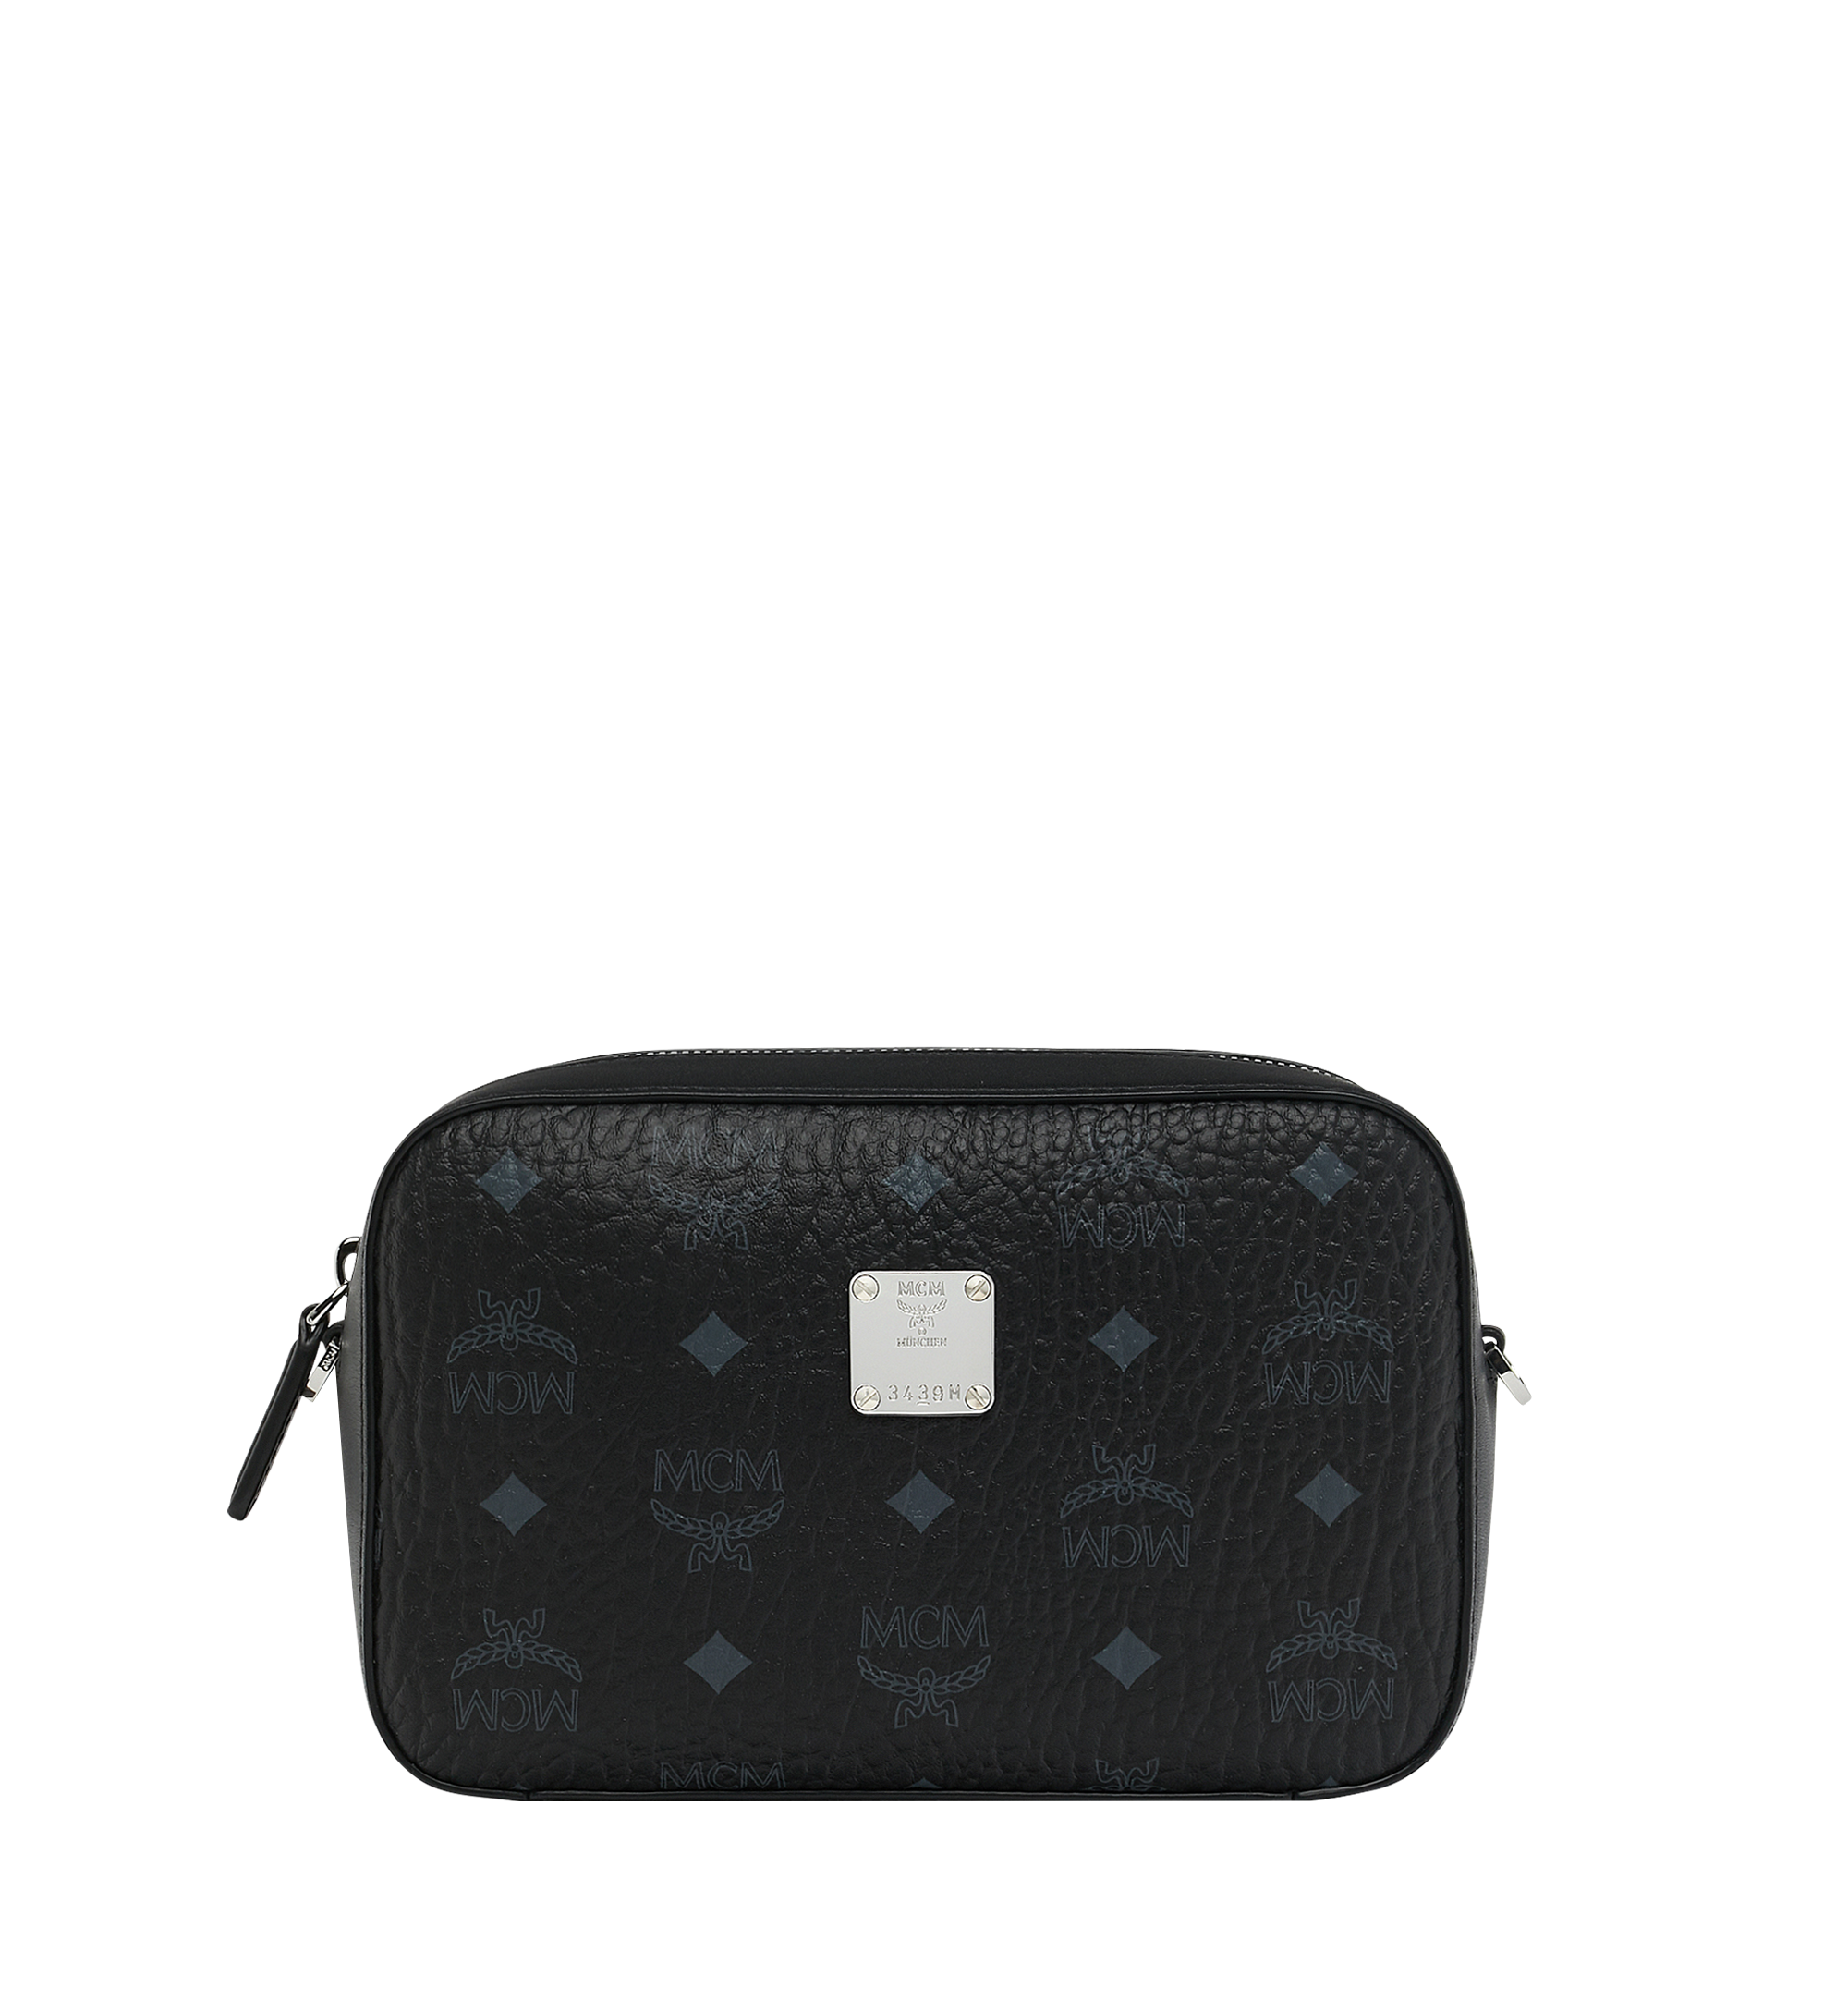 Mcm Essential Disco Camera Bag - Black - Shoulder Bags